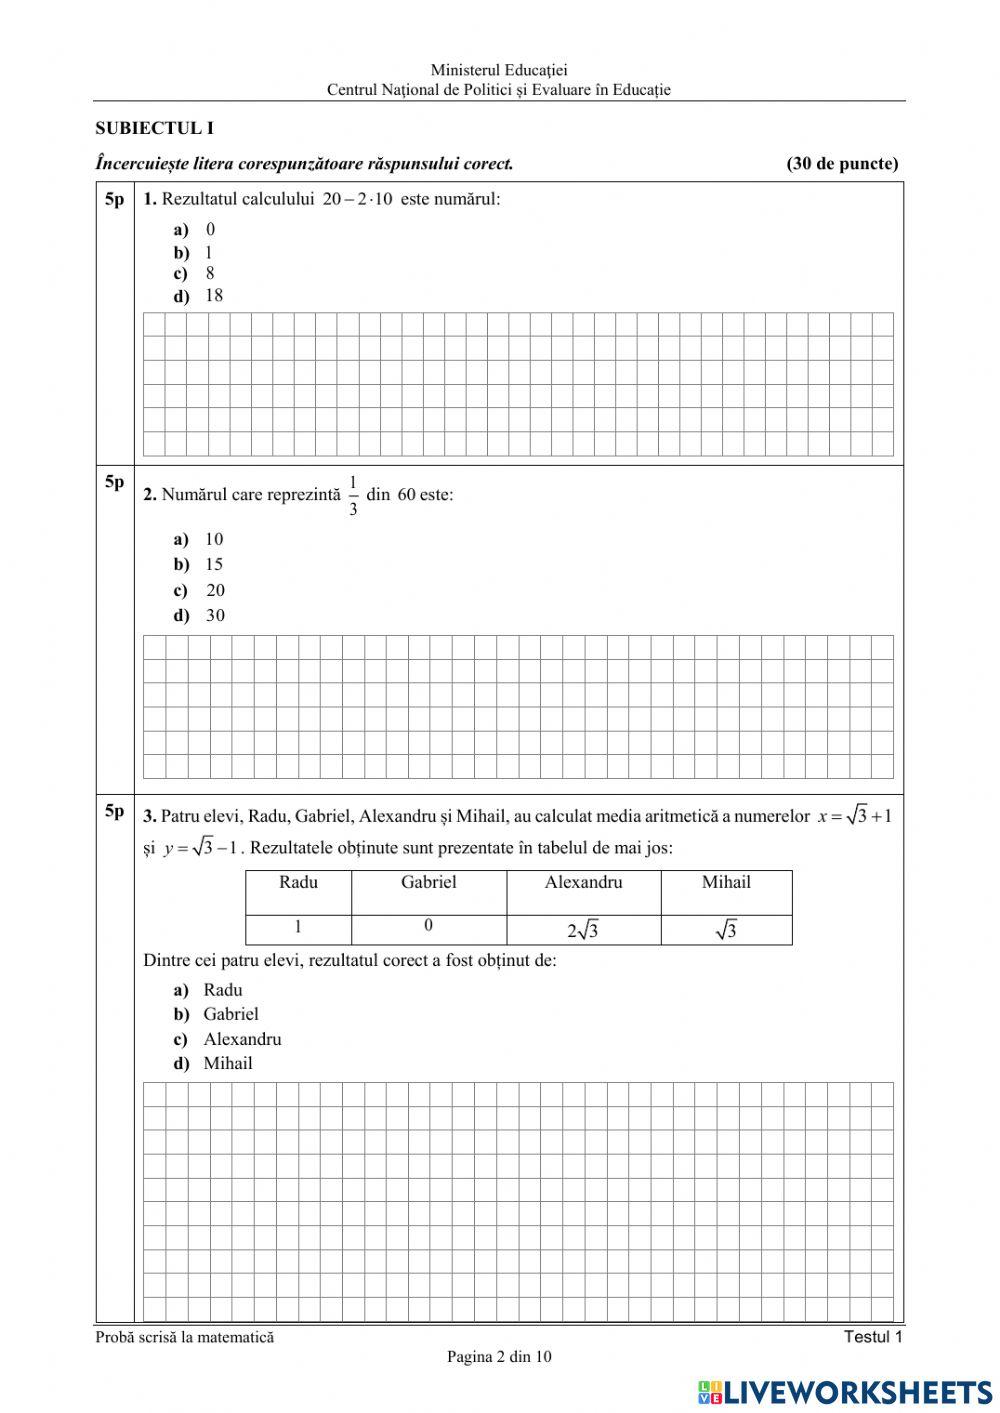 Test1-2001 matematica MEN